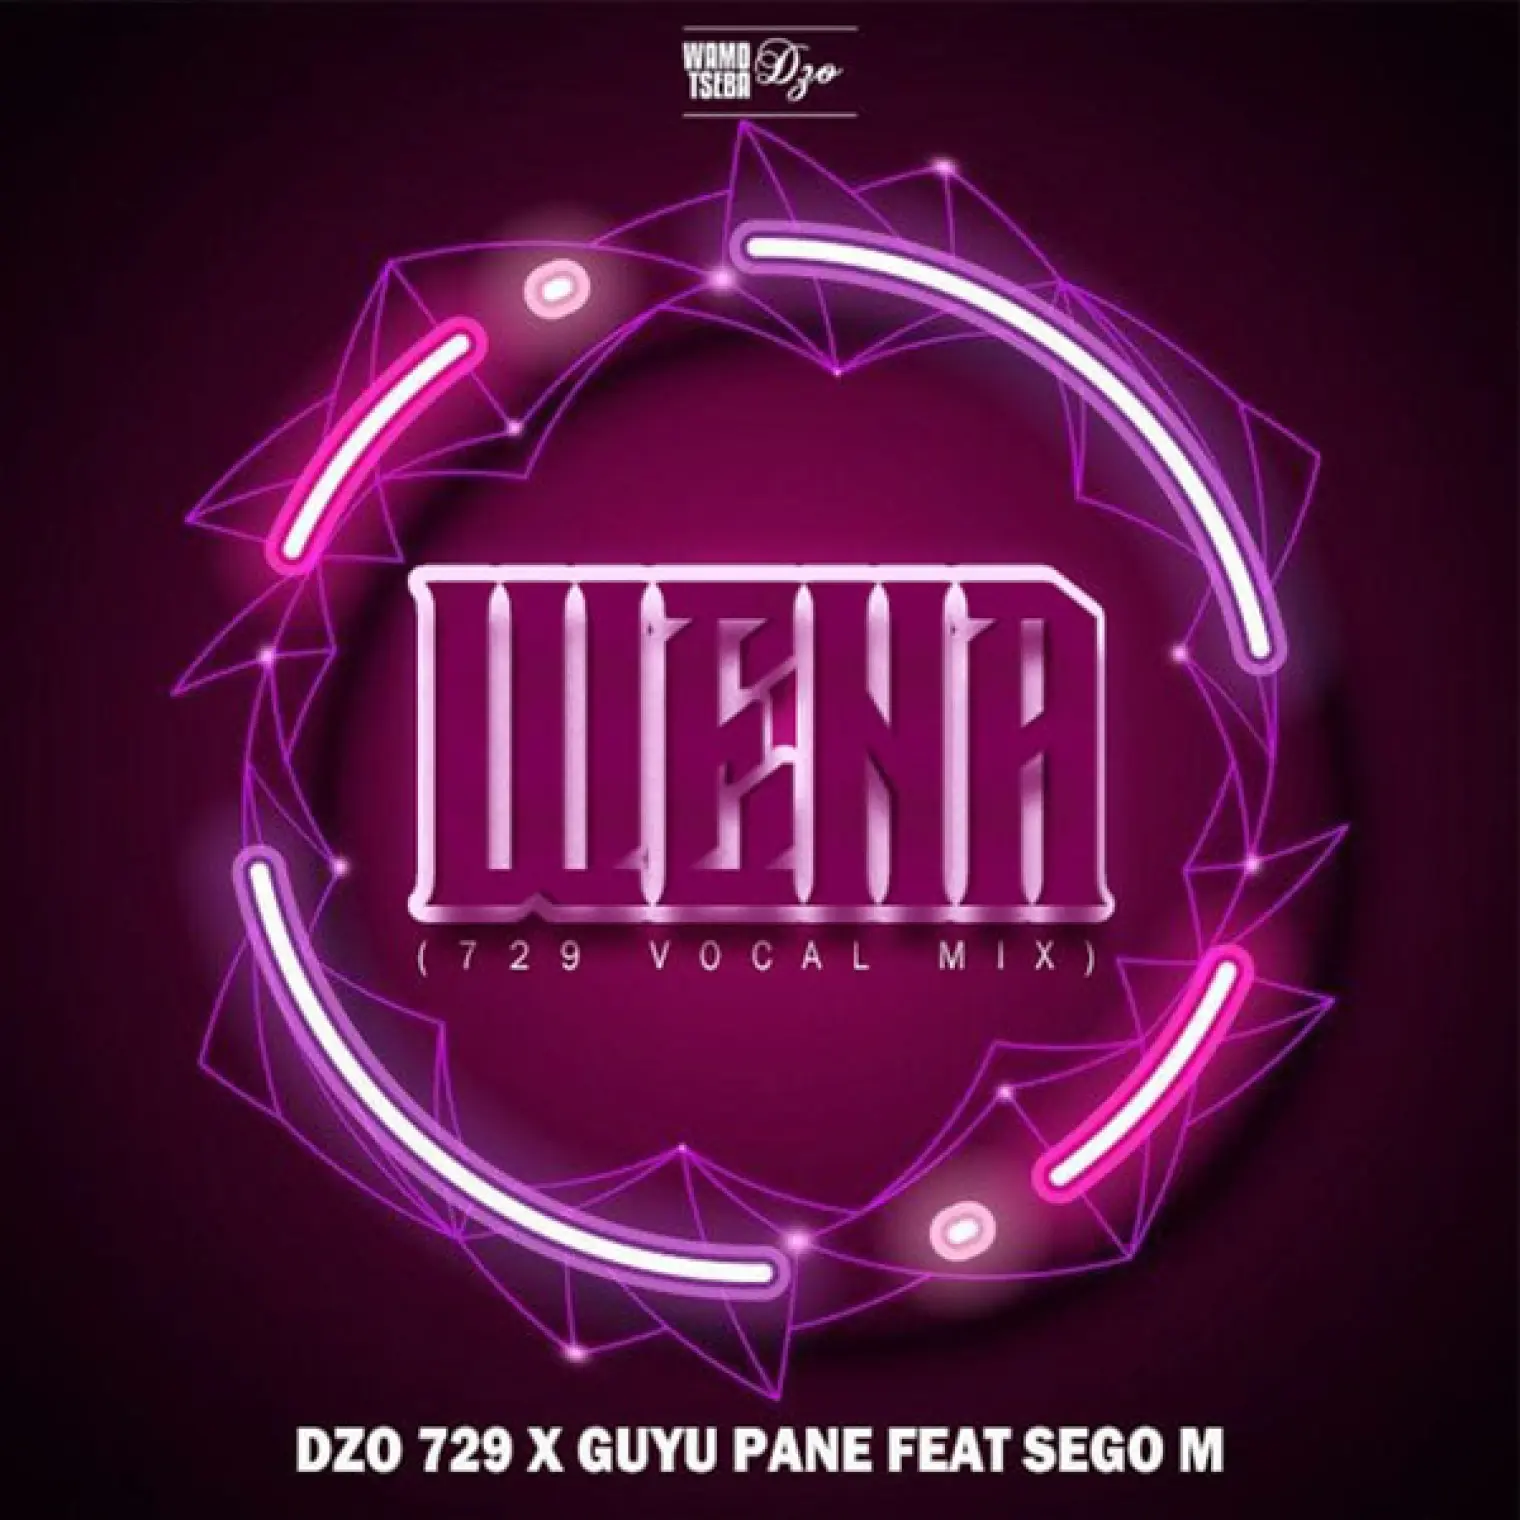 Wena (729 Vocal Mix) (feat. Sego M) -  Dzo 729 